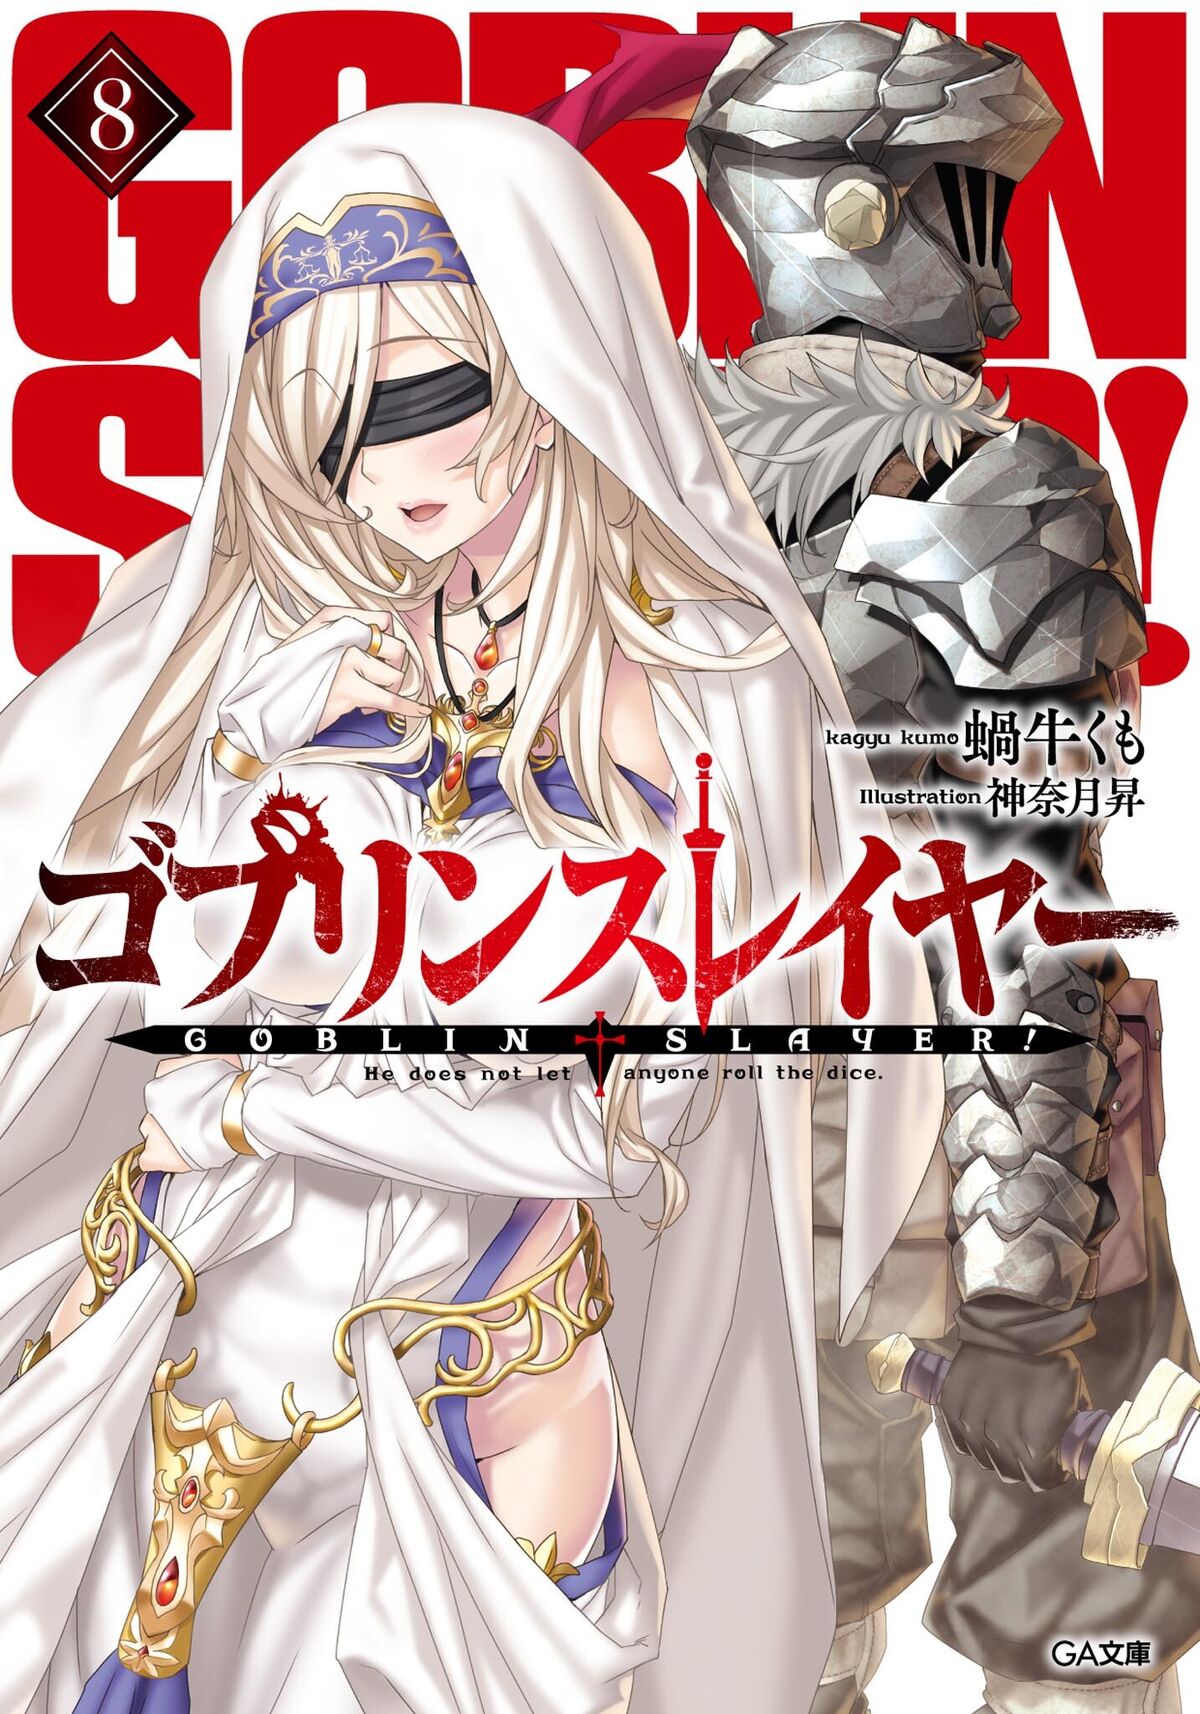 Bloody Light Novel Series 'Goblin Slayer' Gets an Anime